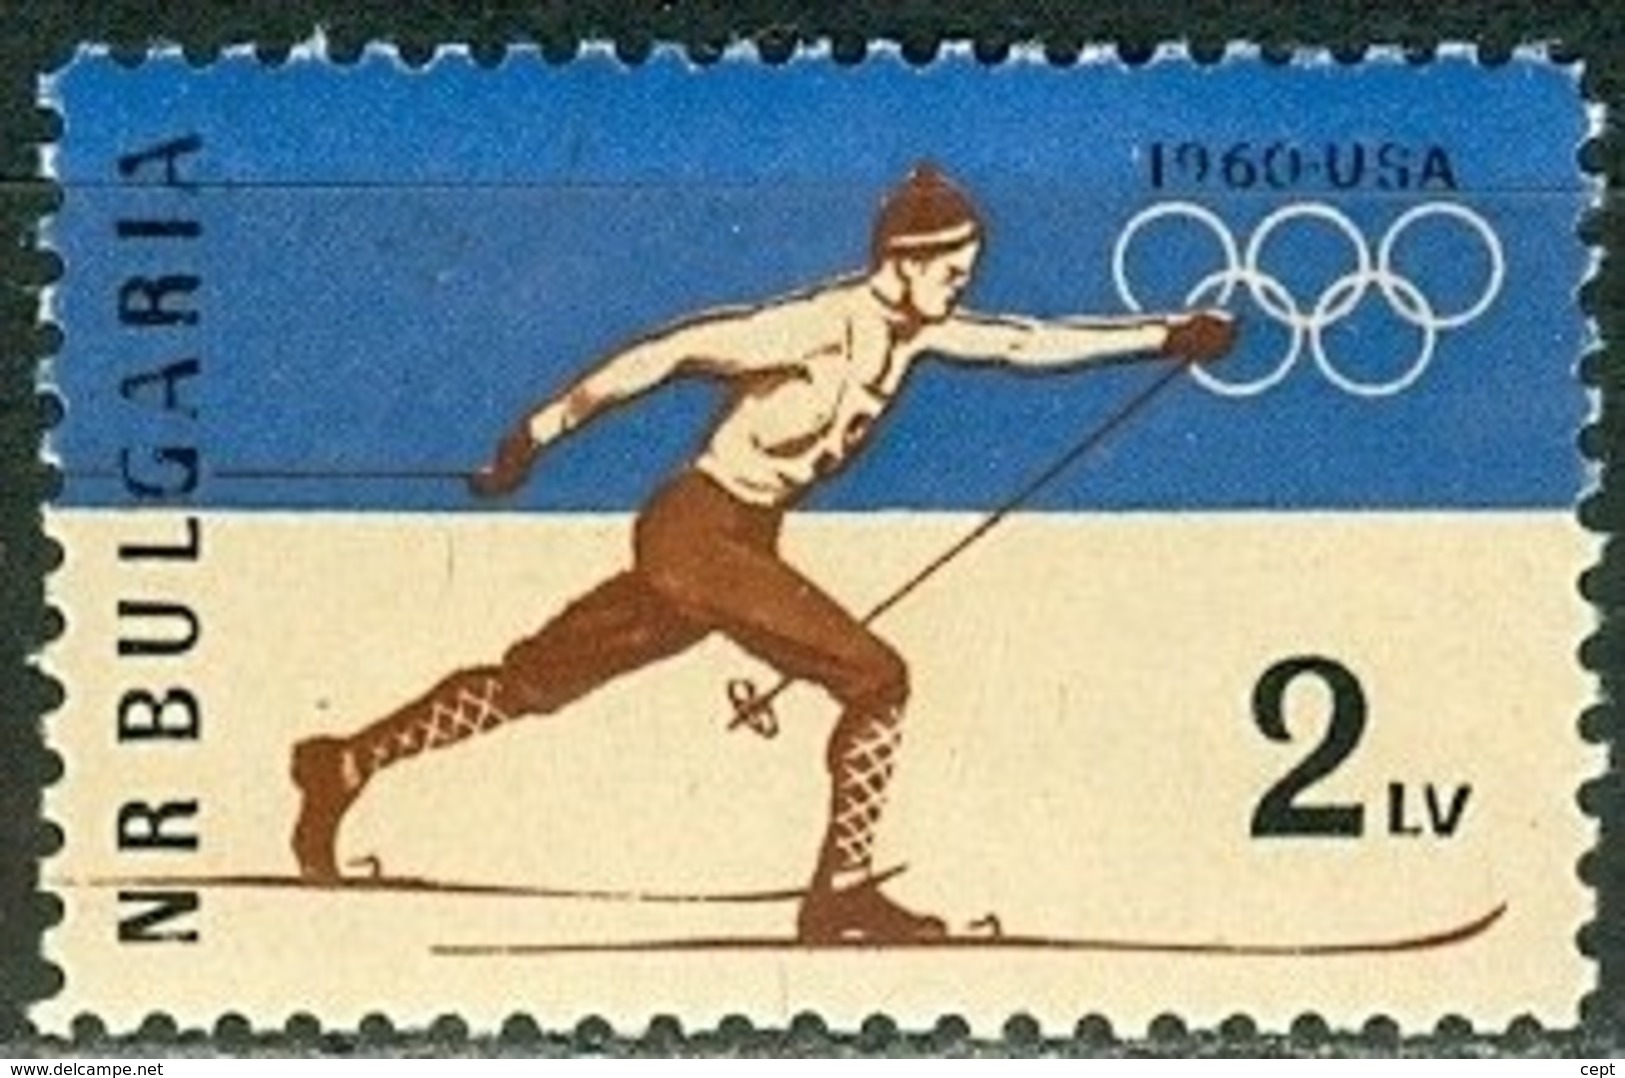 Ski-running - Bulgaria / Bulgarie 1960 - Stamp  MNH** - Inverno1960: Squaw Valley